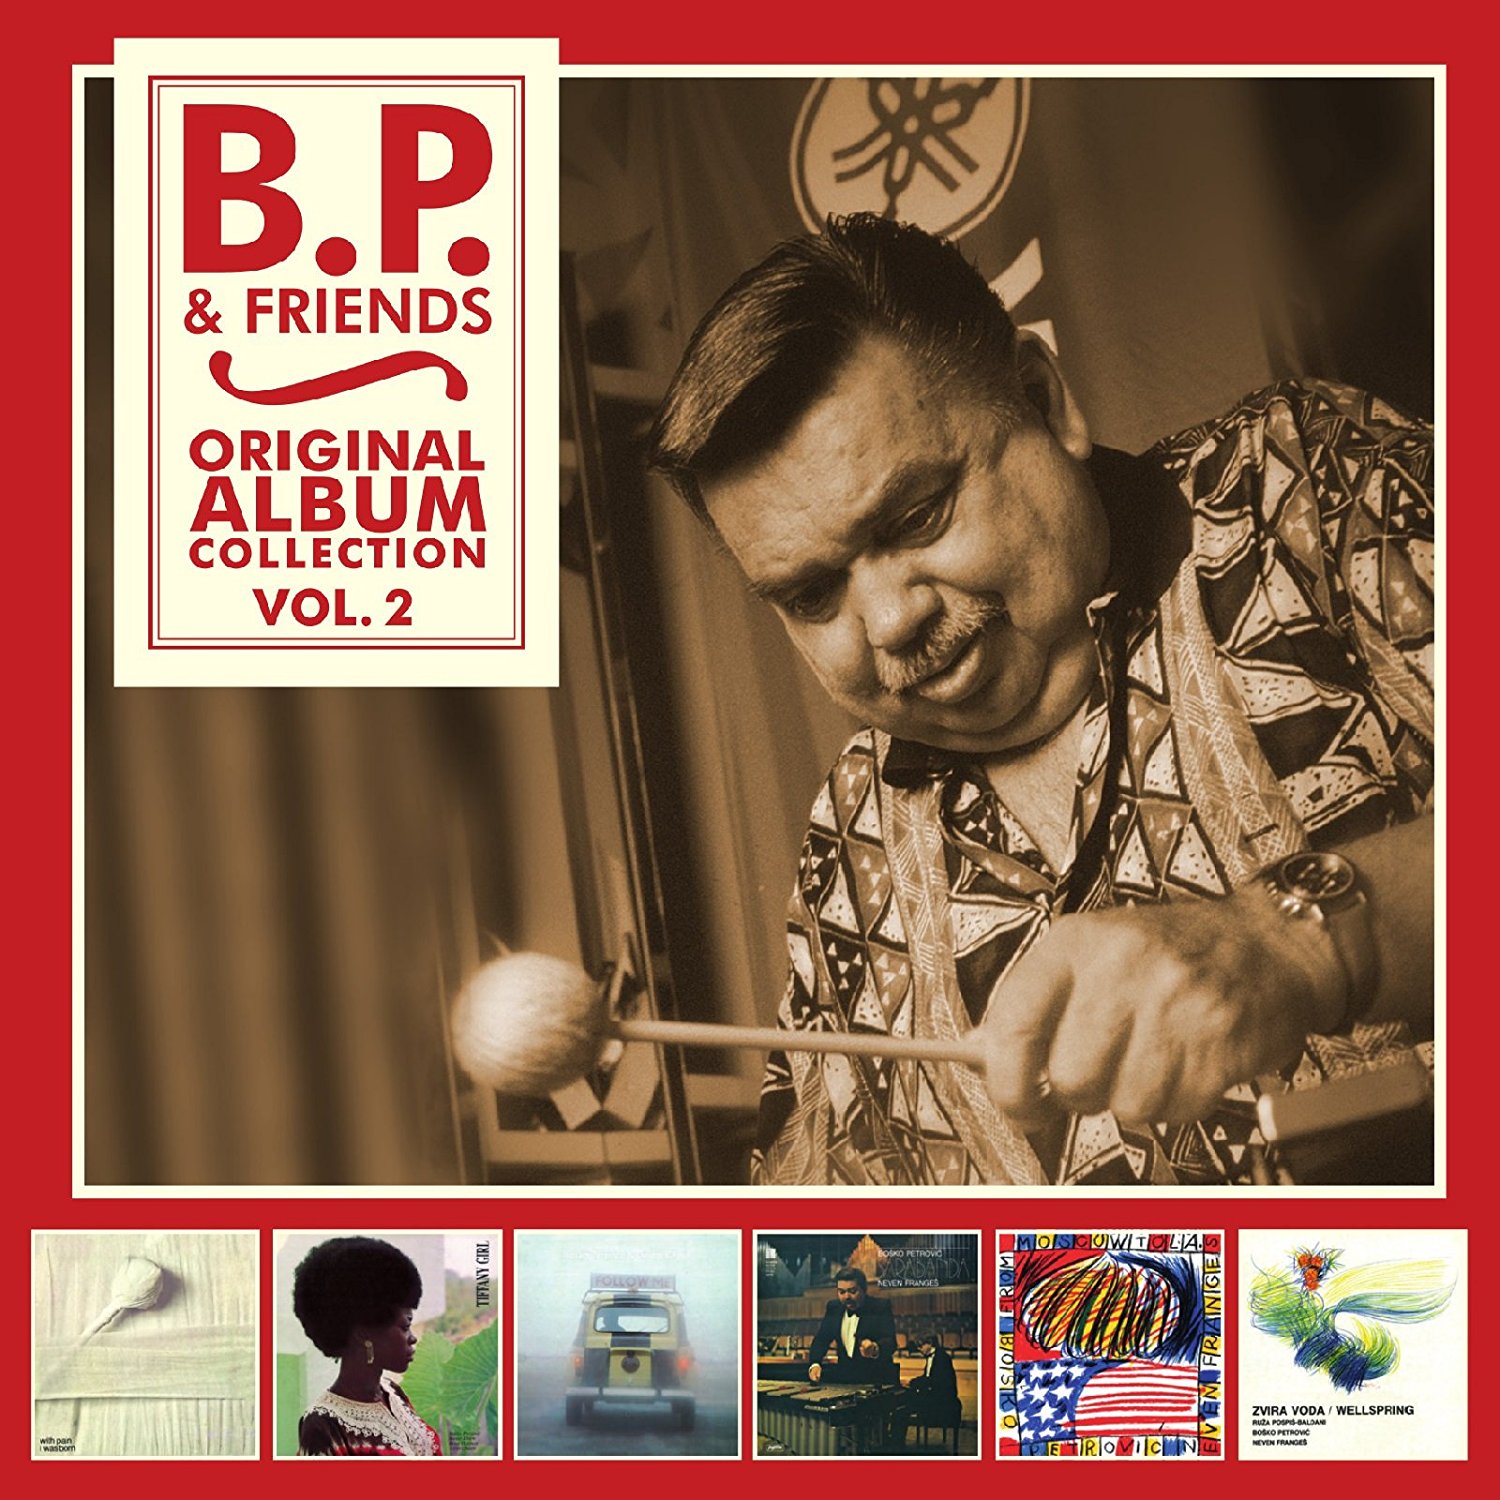 B.P. & Friends - Original Album Collection Vol. 2